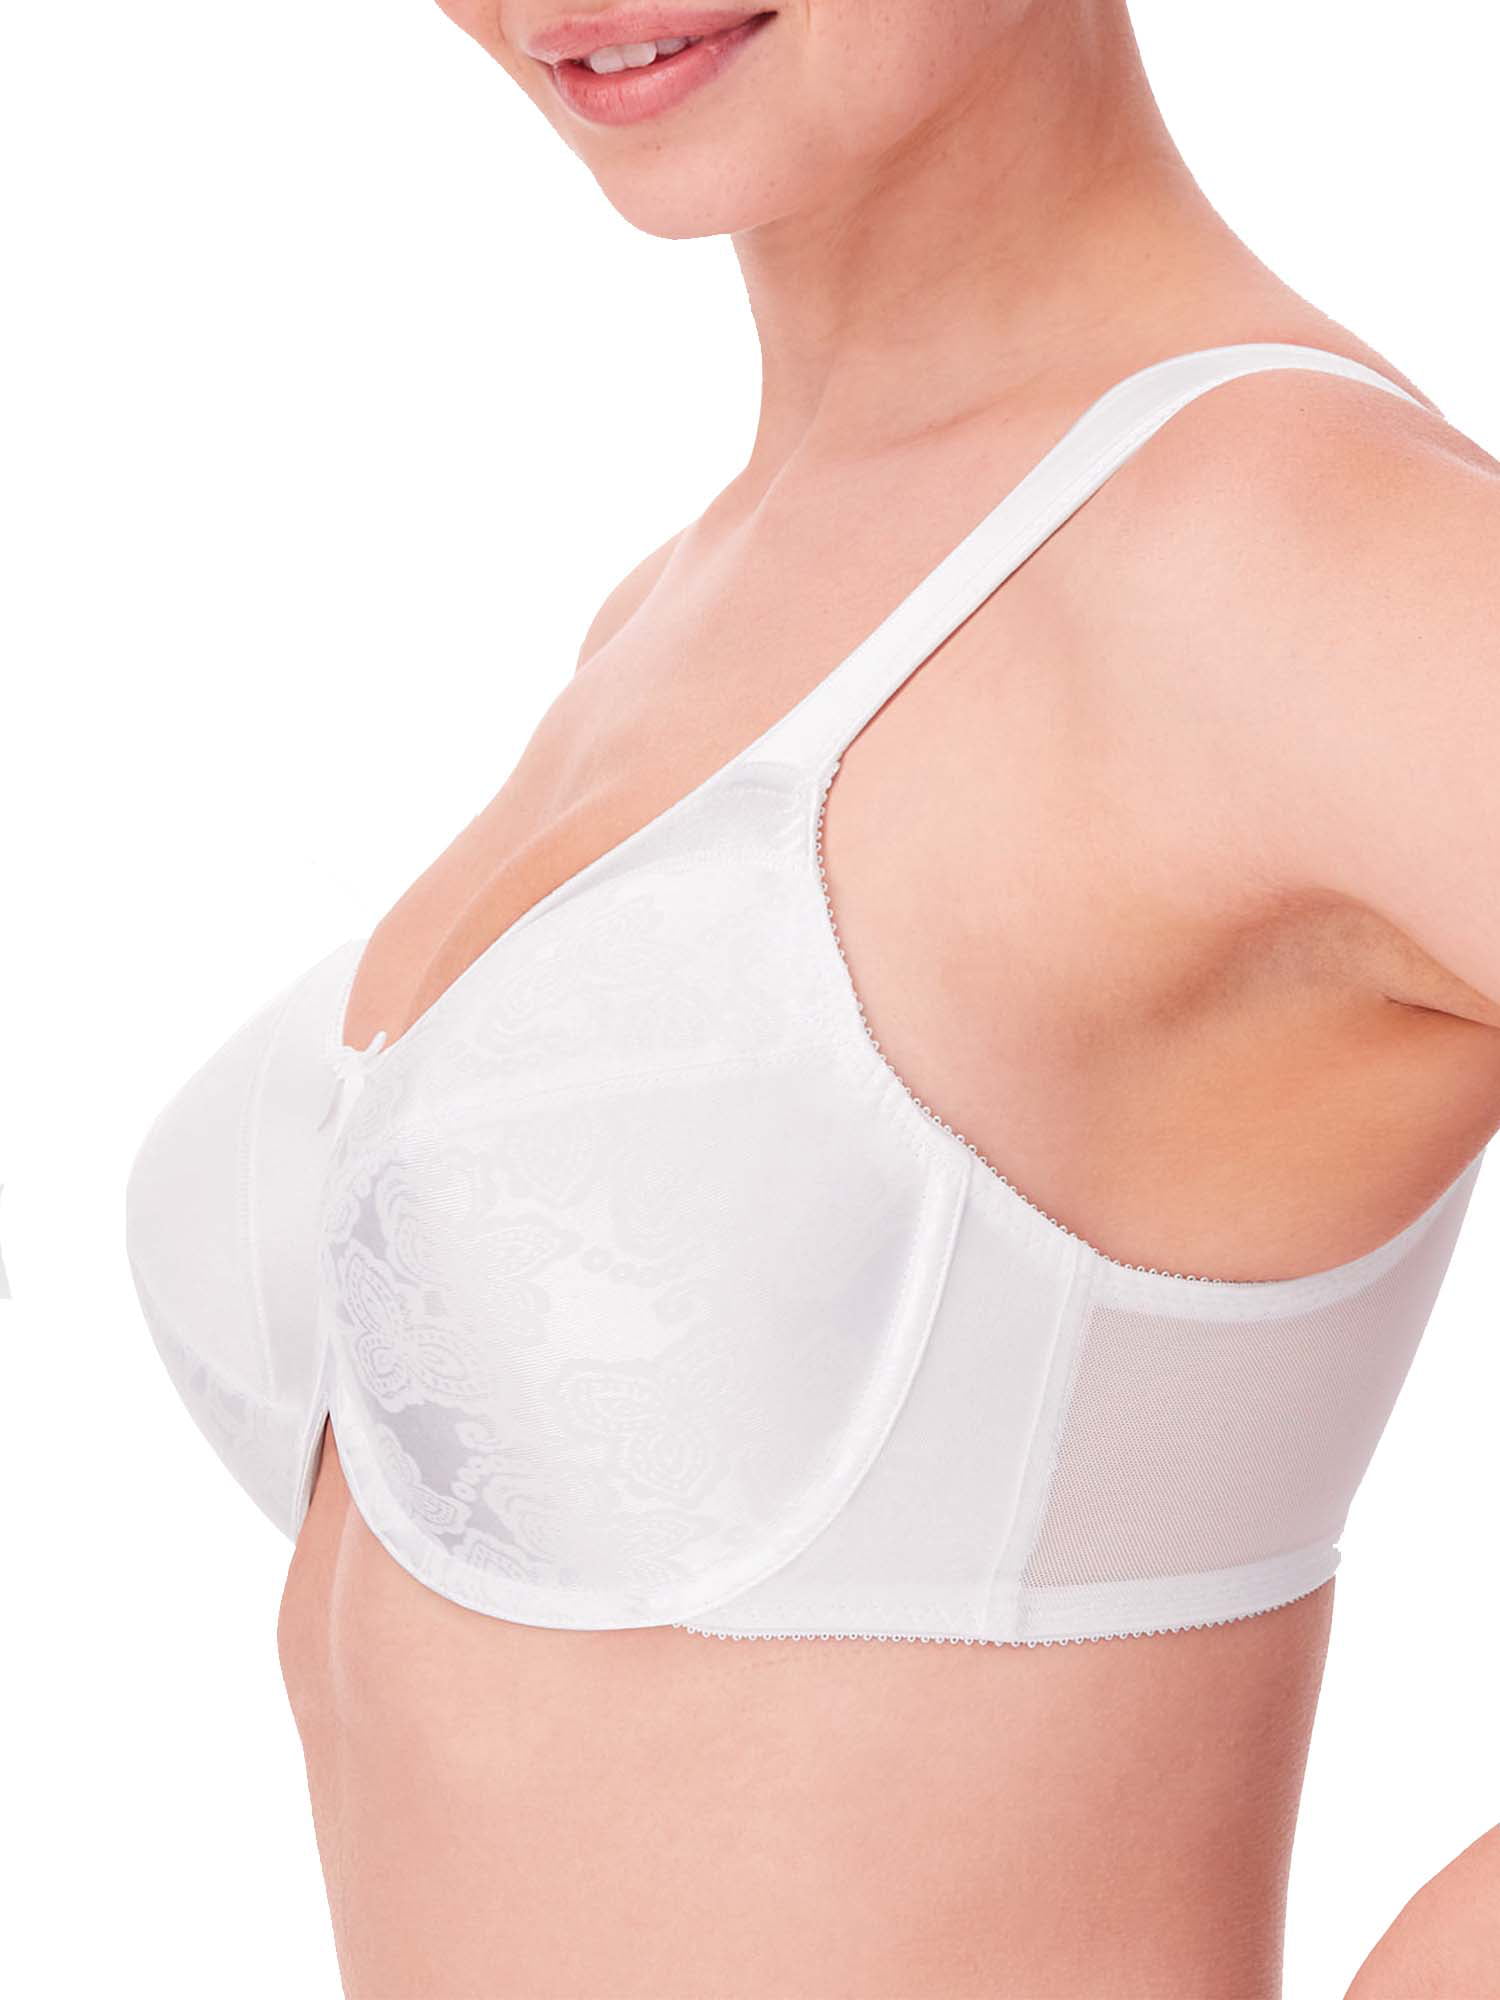 35C Bra Size Cotton Seamless Bra Lingerie To Hide Stomach Sport Bra For  Small Breast Wireless Seamless Bra White Lace Bras Bra For Scalloped Bra